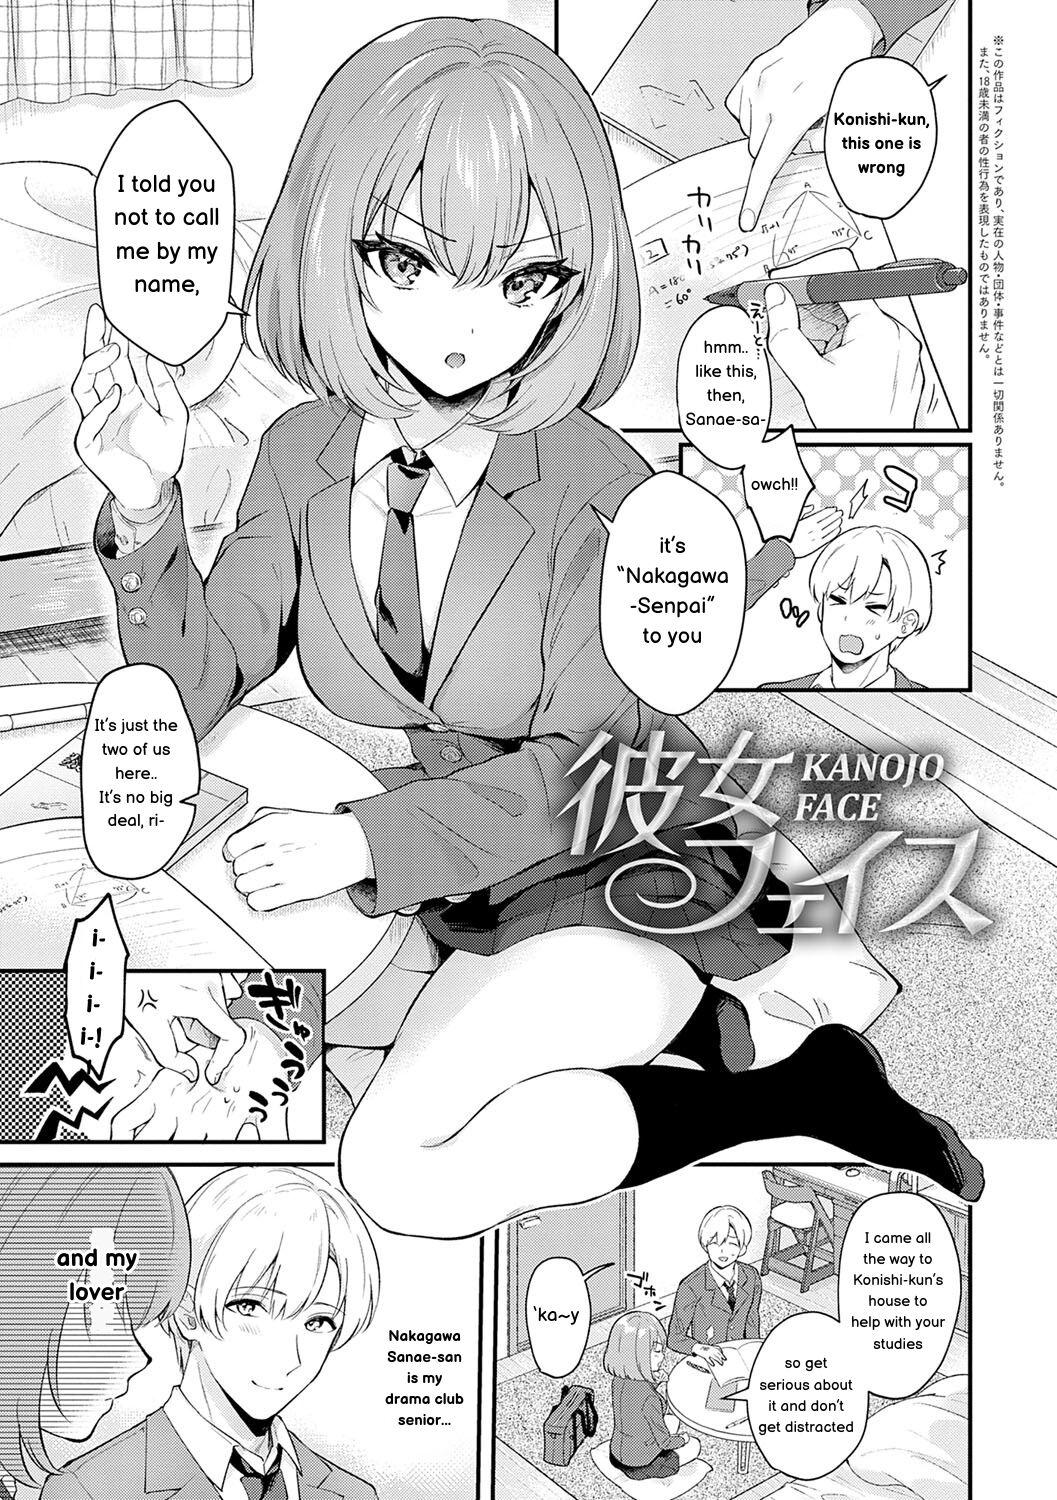 Banho Kanojo Face Teenage Sex - Page 2